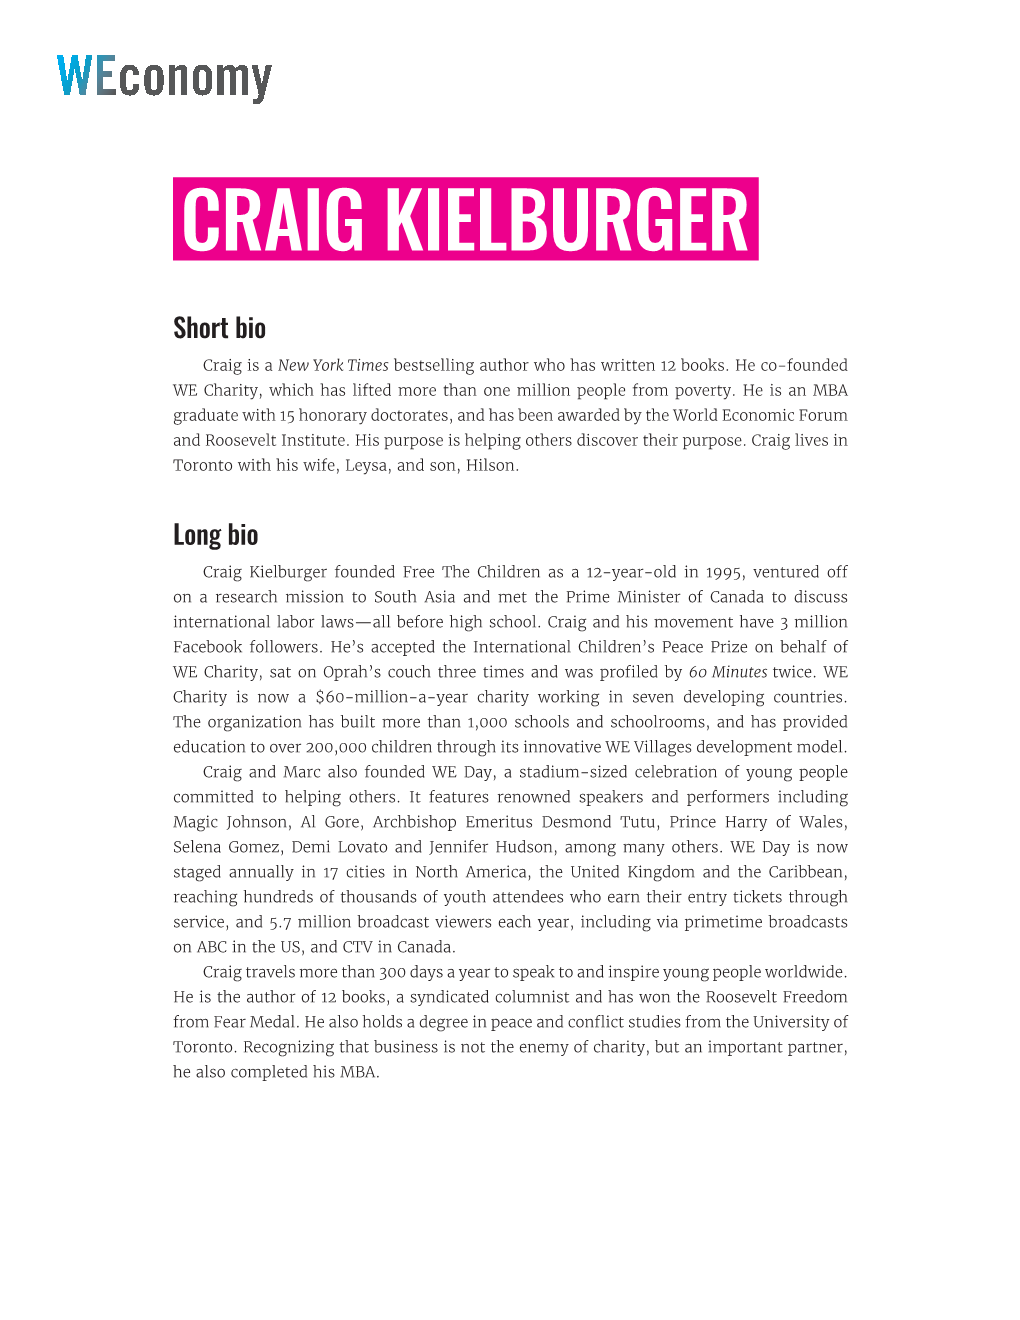 Craig Kielburger